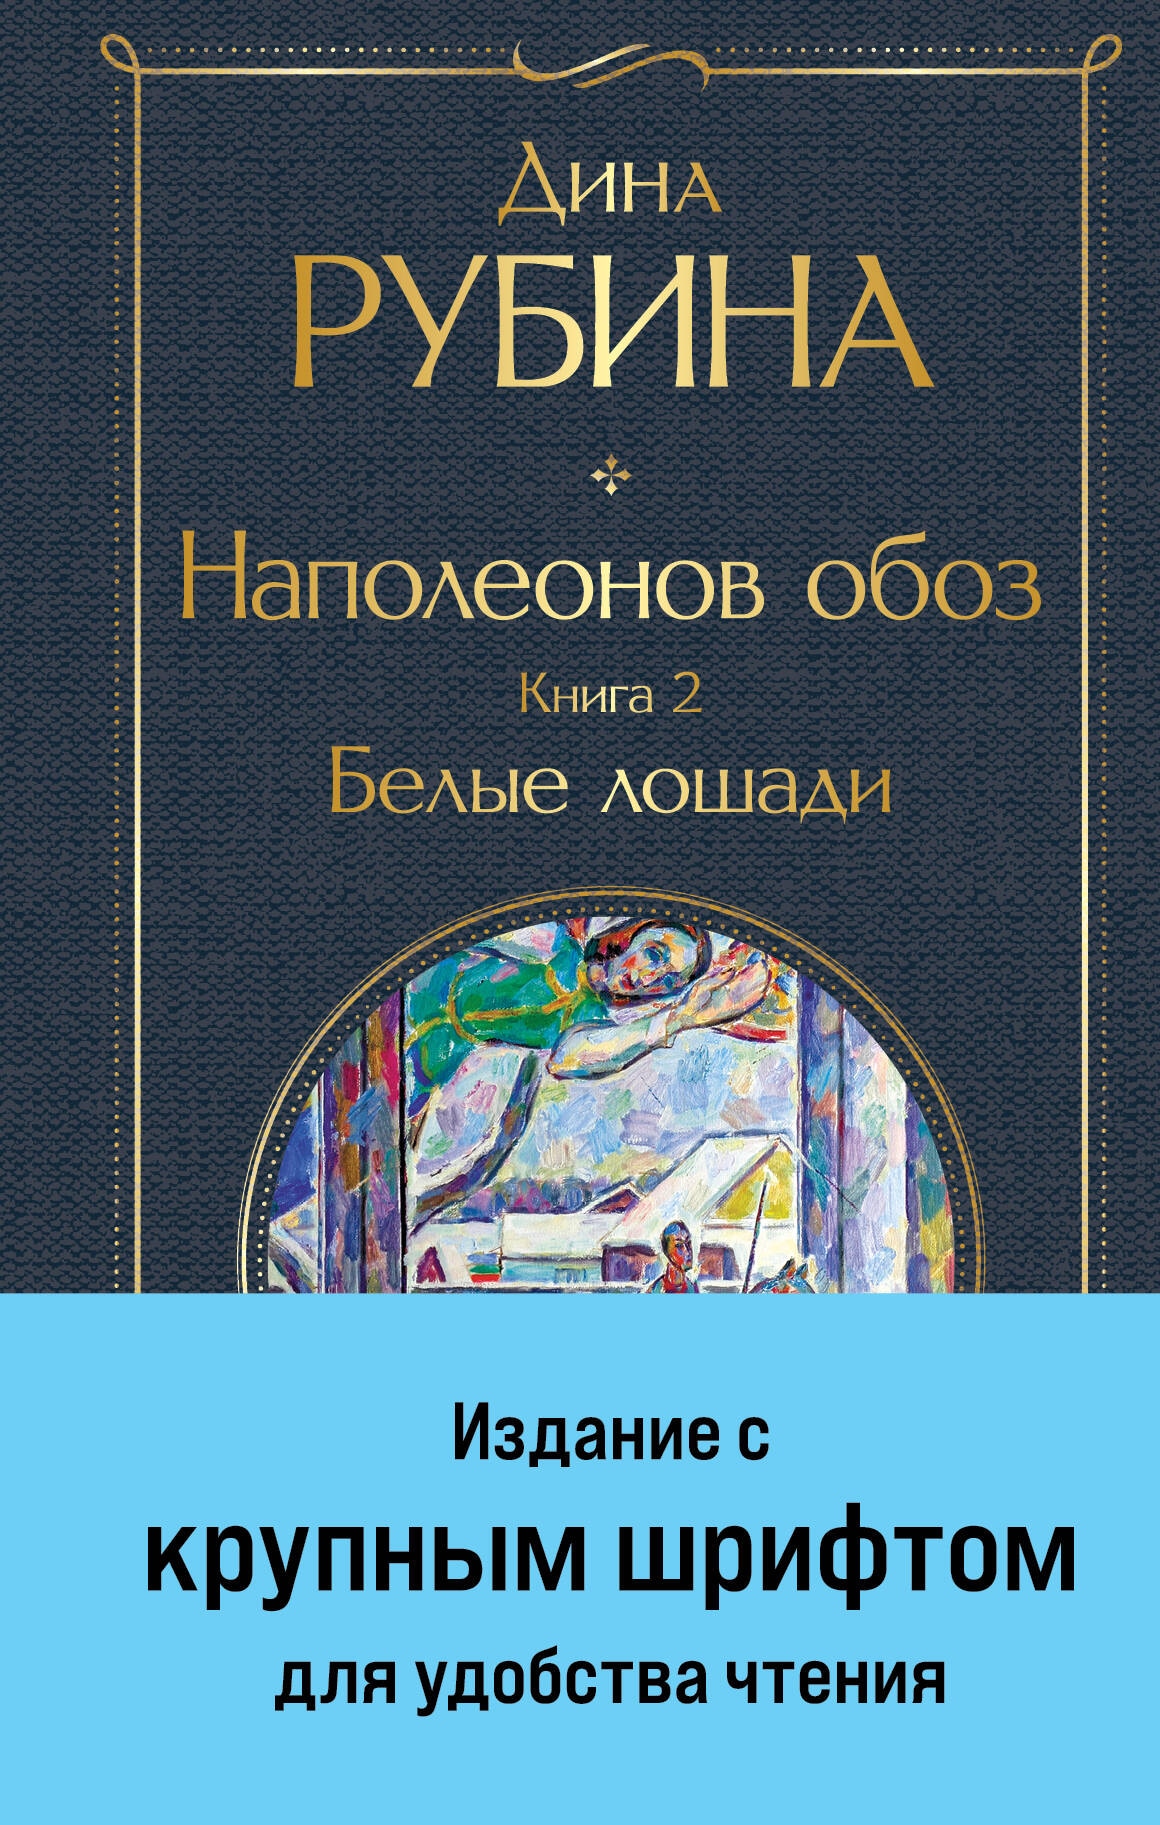 Book “Наполеонов обоз. Книга 2: Белые лошади” by Дина Рубина — 2024